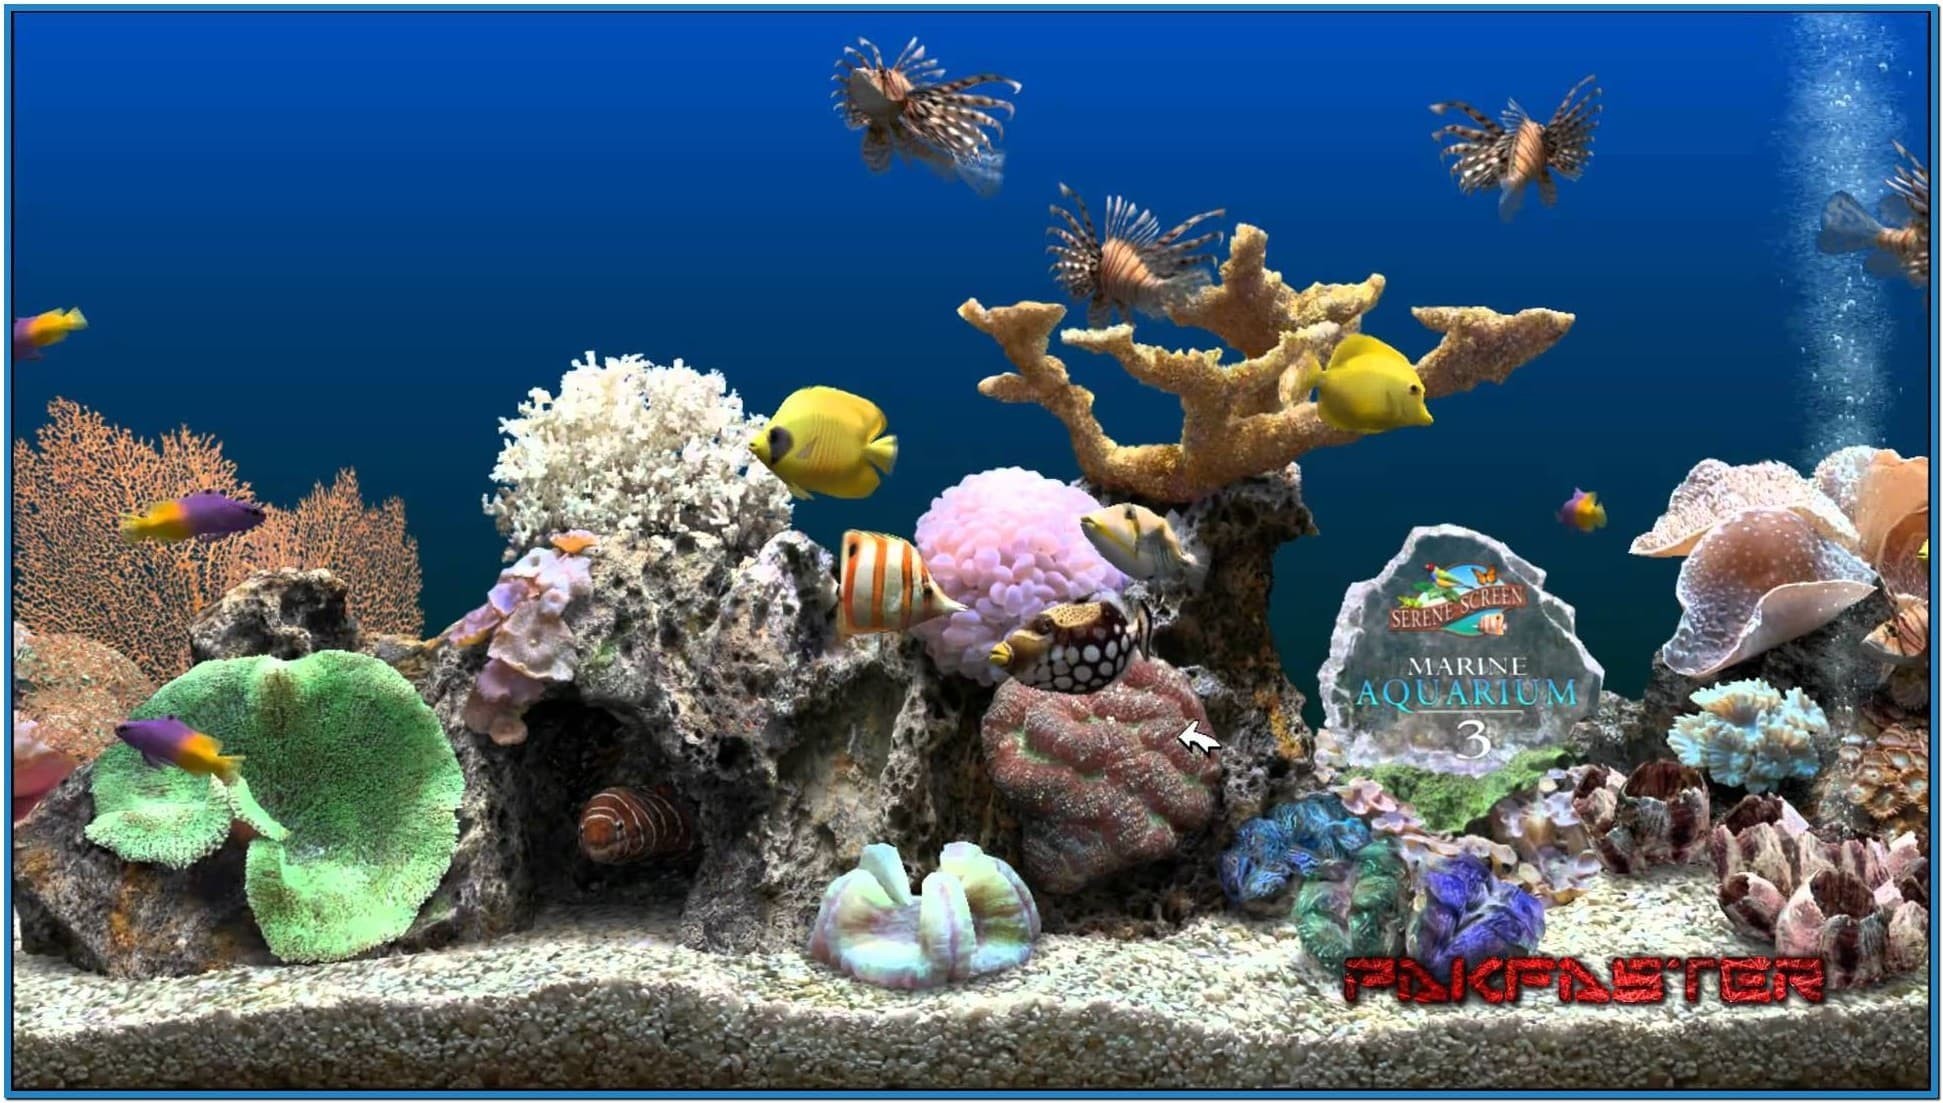 1943x1103 Screensaver marine aquarium deluxe 3.2 - Download free